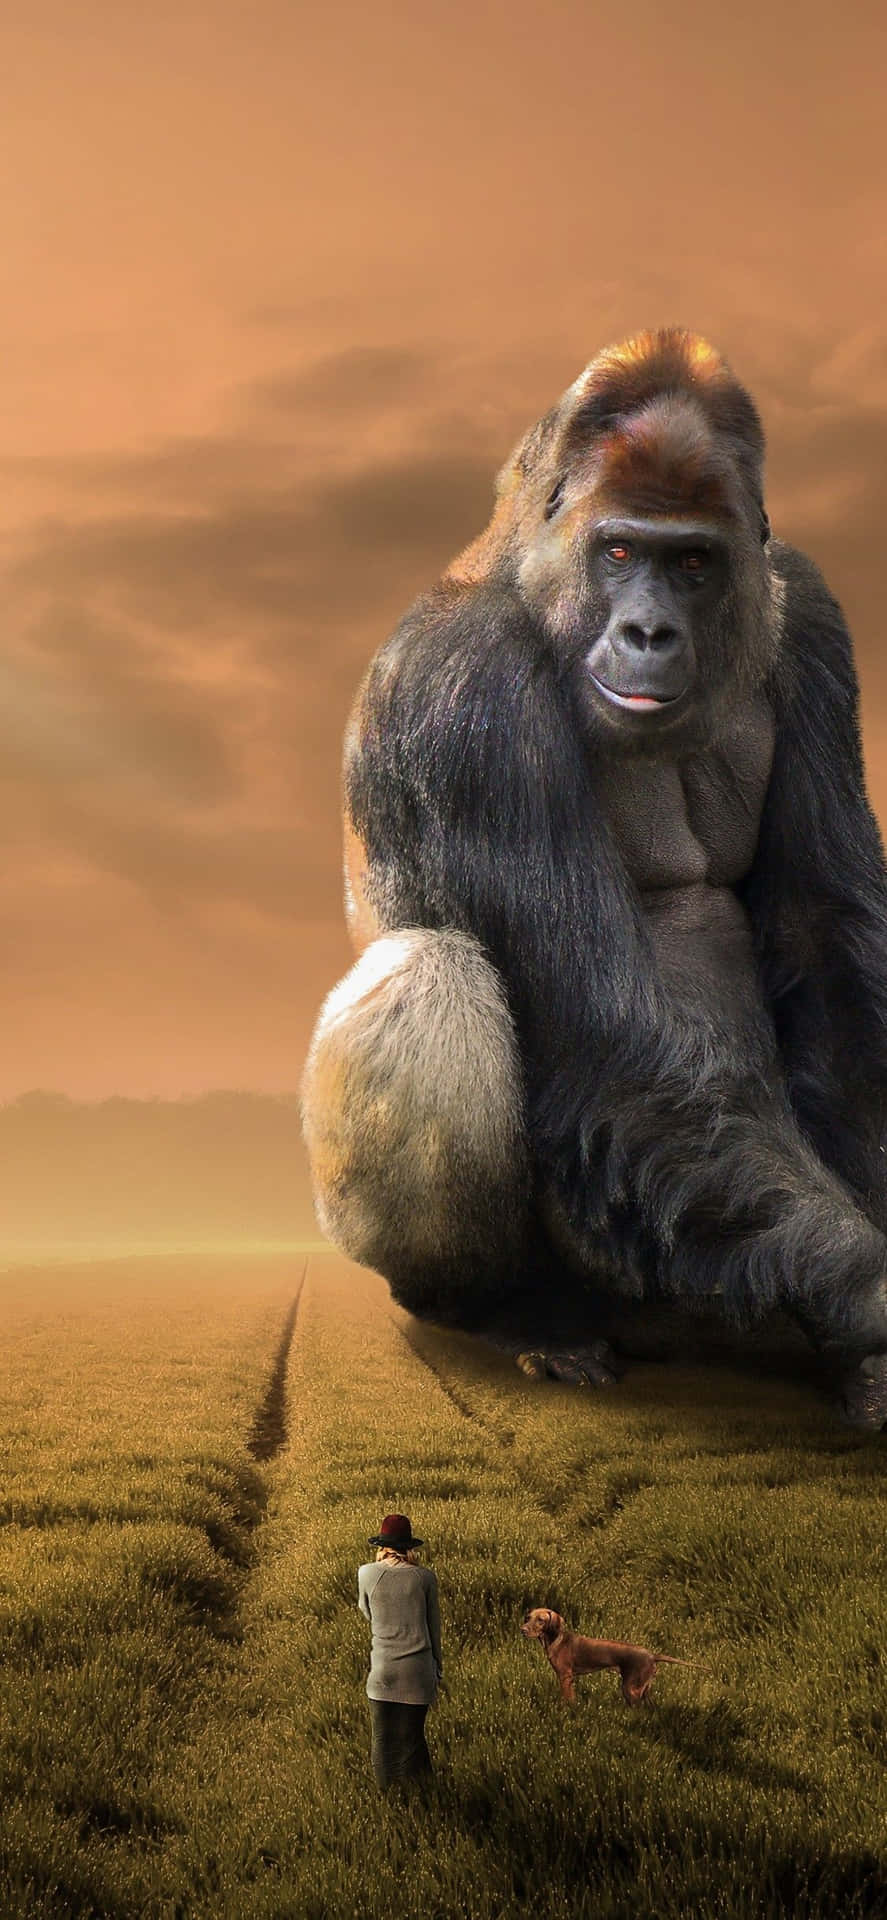 Iphonexs Max Gorilla-bakgrund Gigantisk Primat